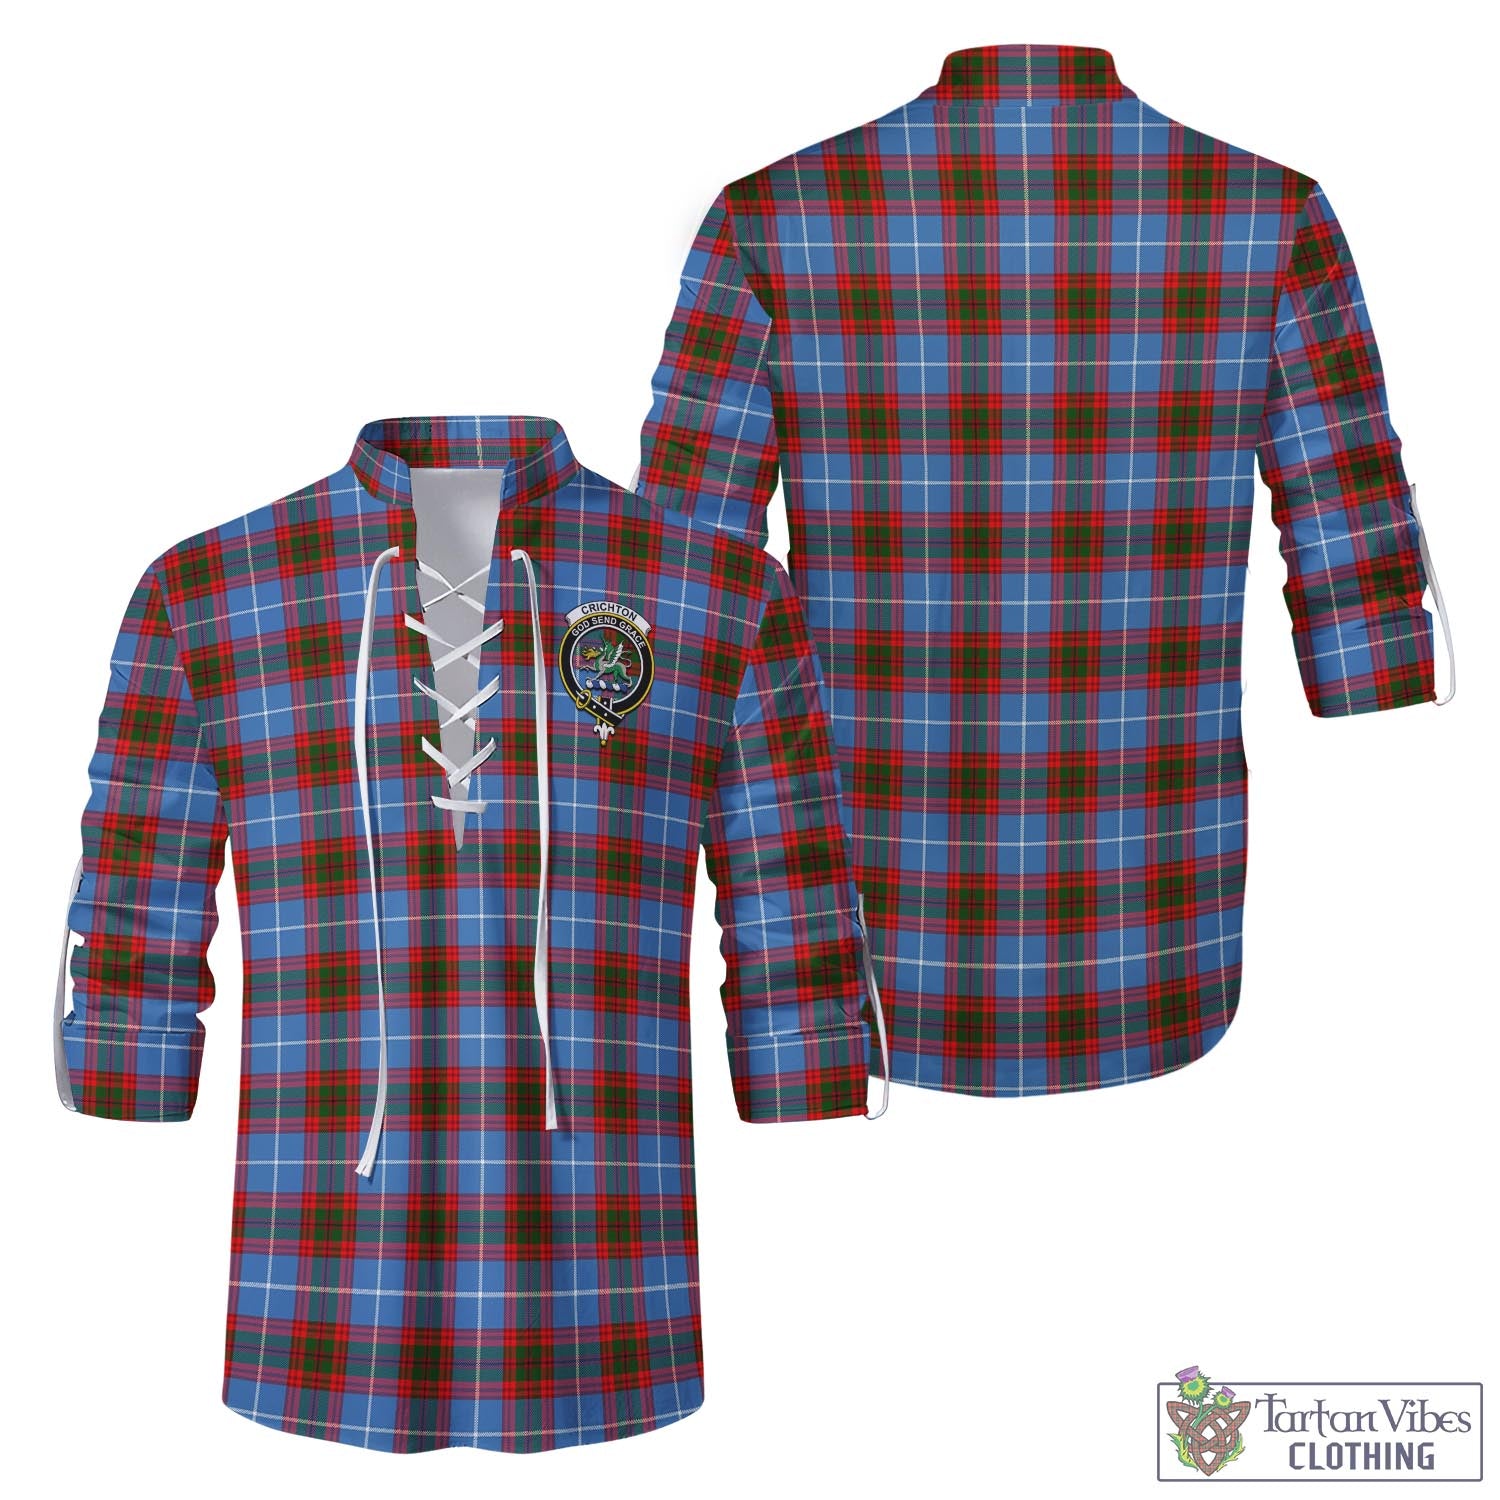 Tartan Vibes Clothing Crichton Tartan Men's Scottish Traditional Jacobite Ghillie Kilt Shirt with Family Crest